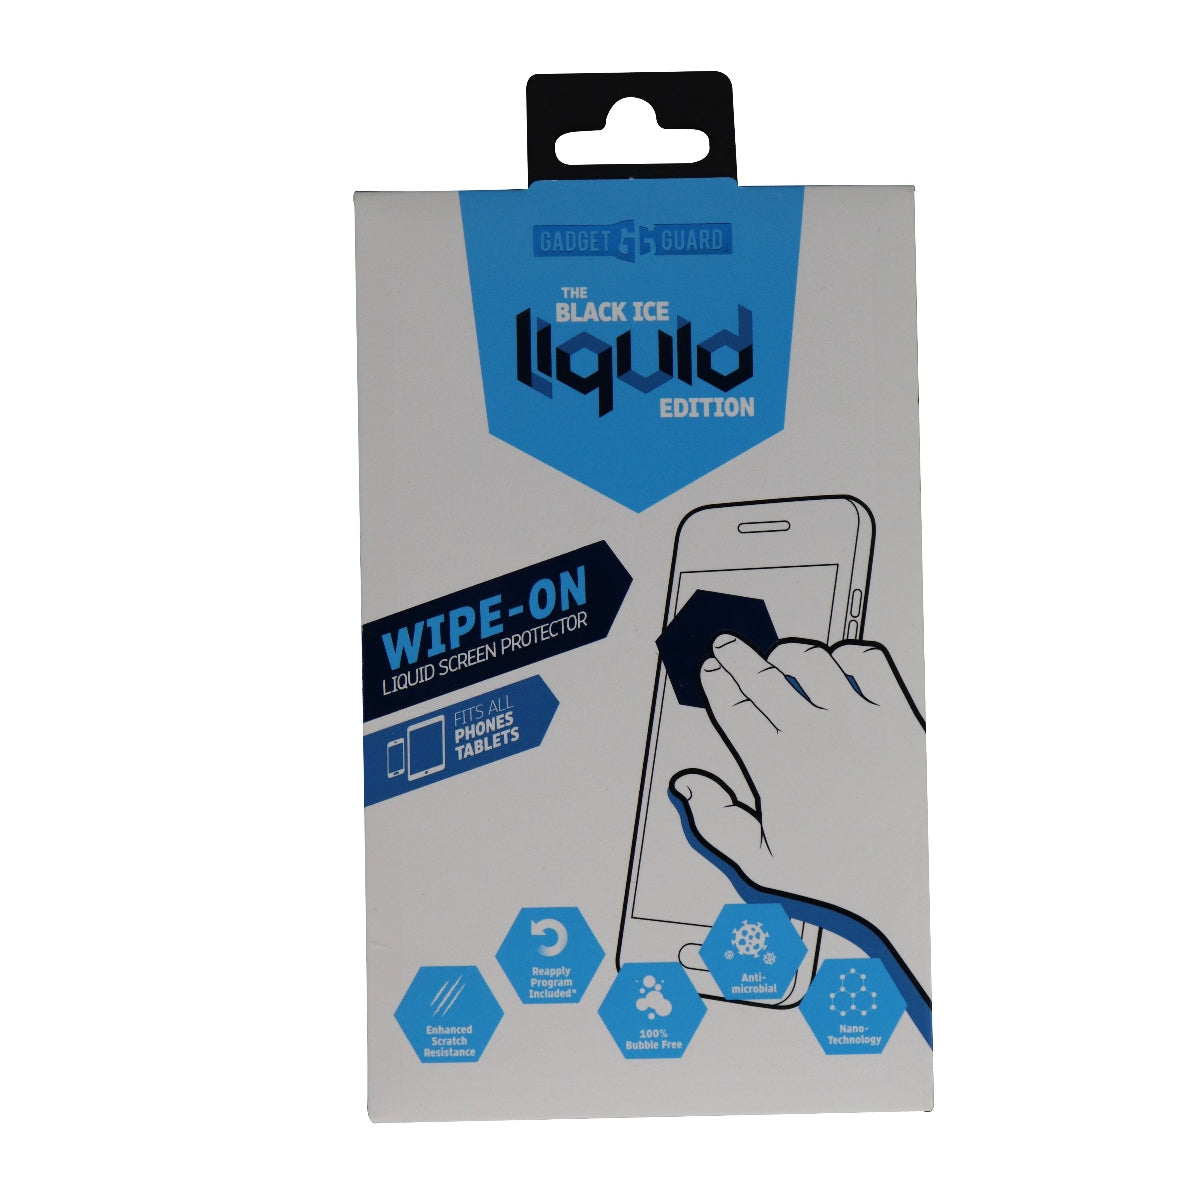 Gadget Guard Black Ice Liquid Edition Screen Protector for All Phones & Tablets